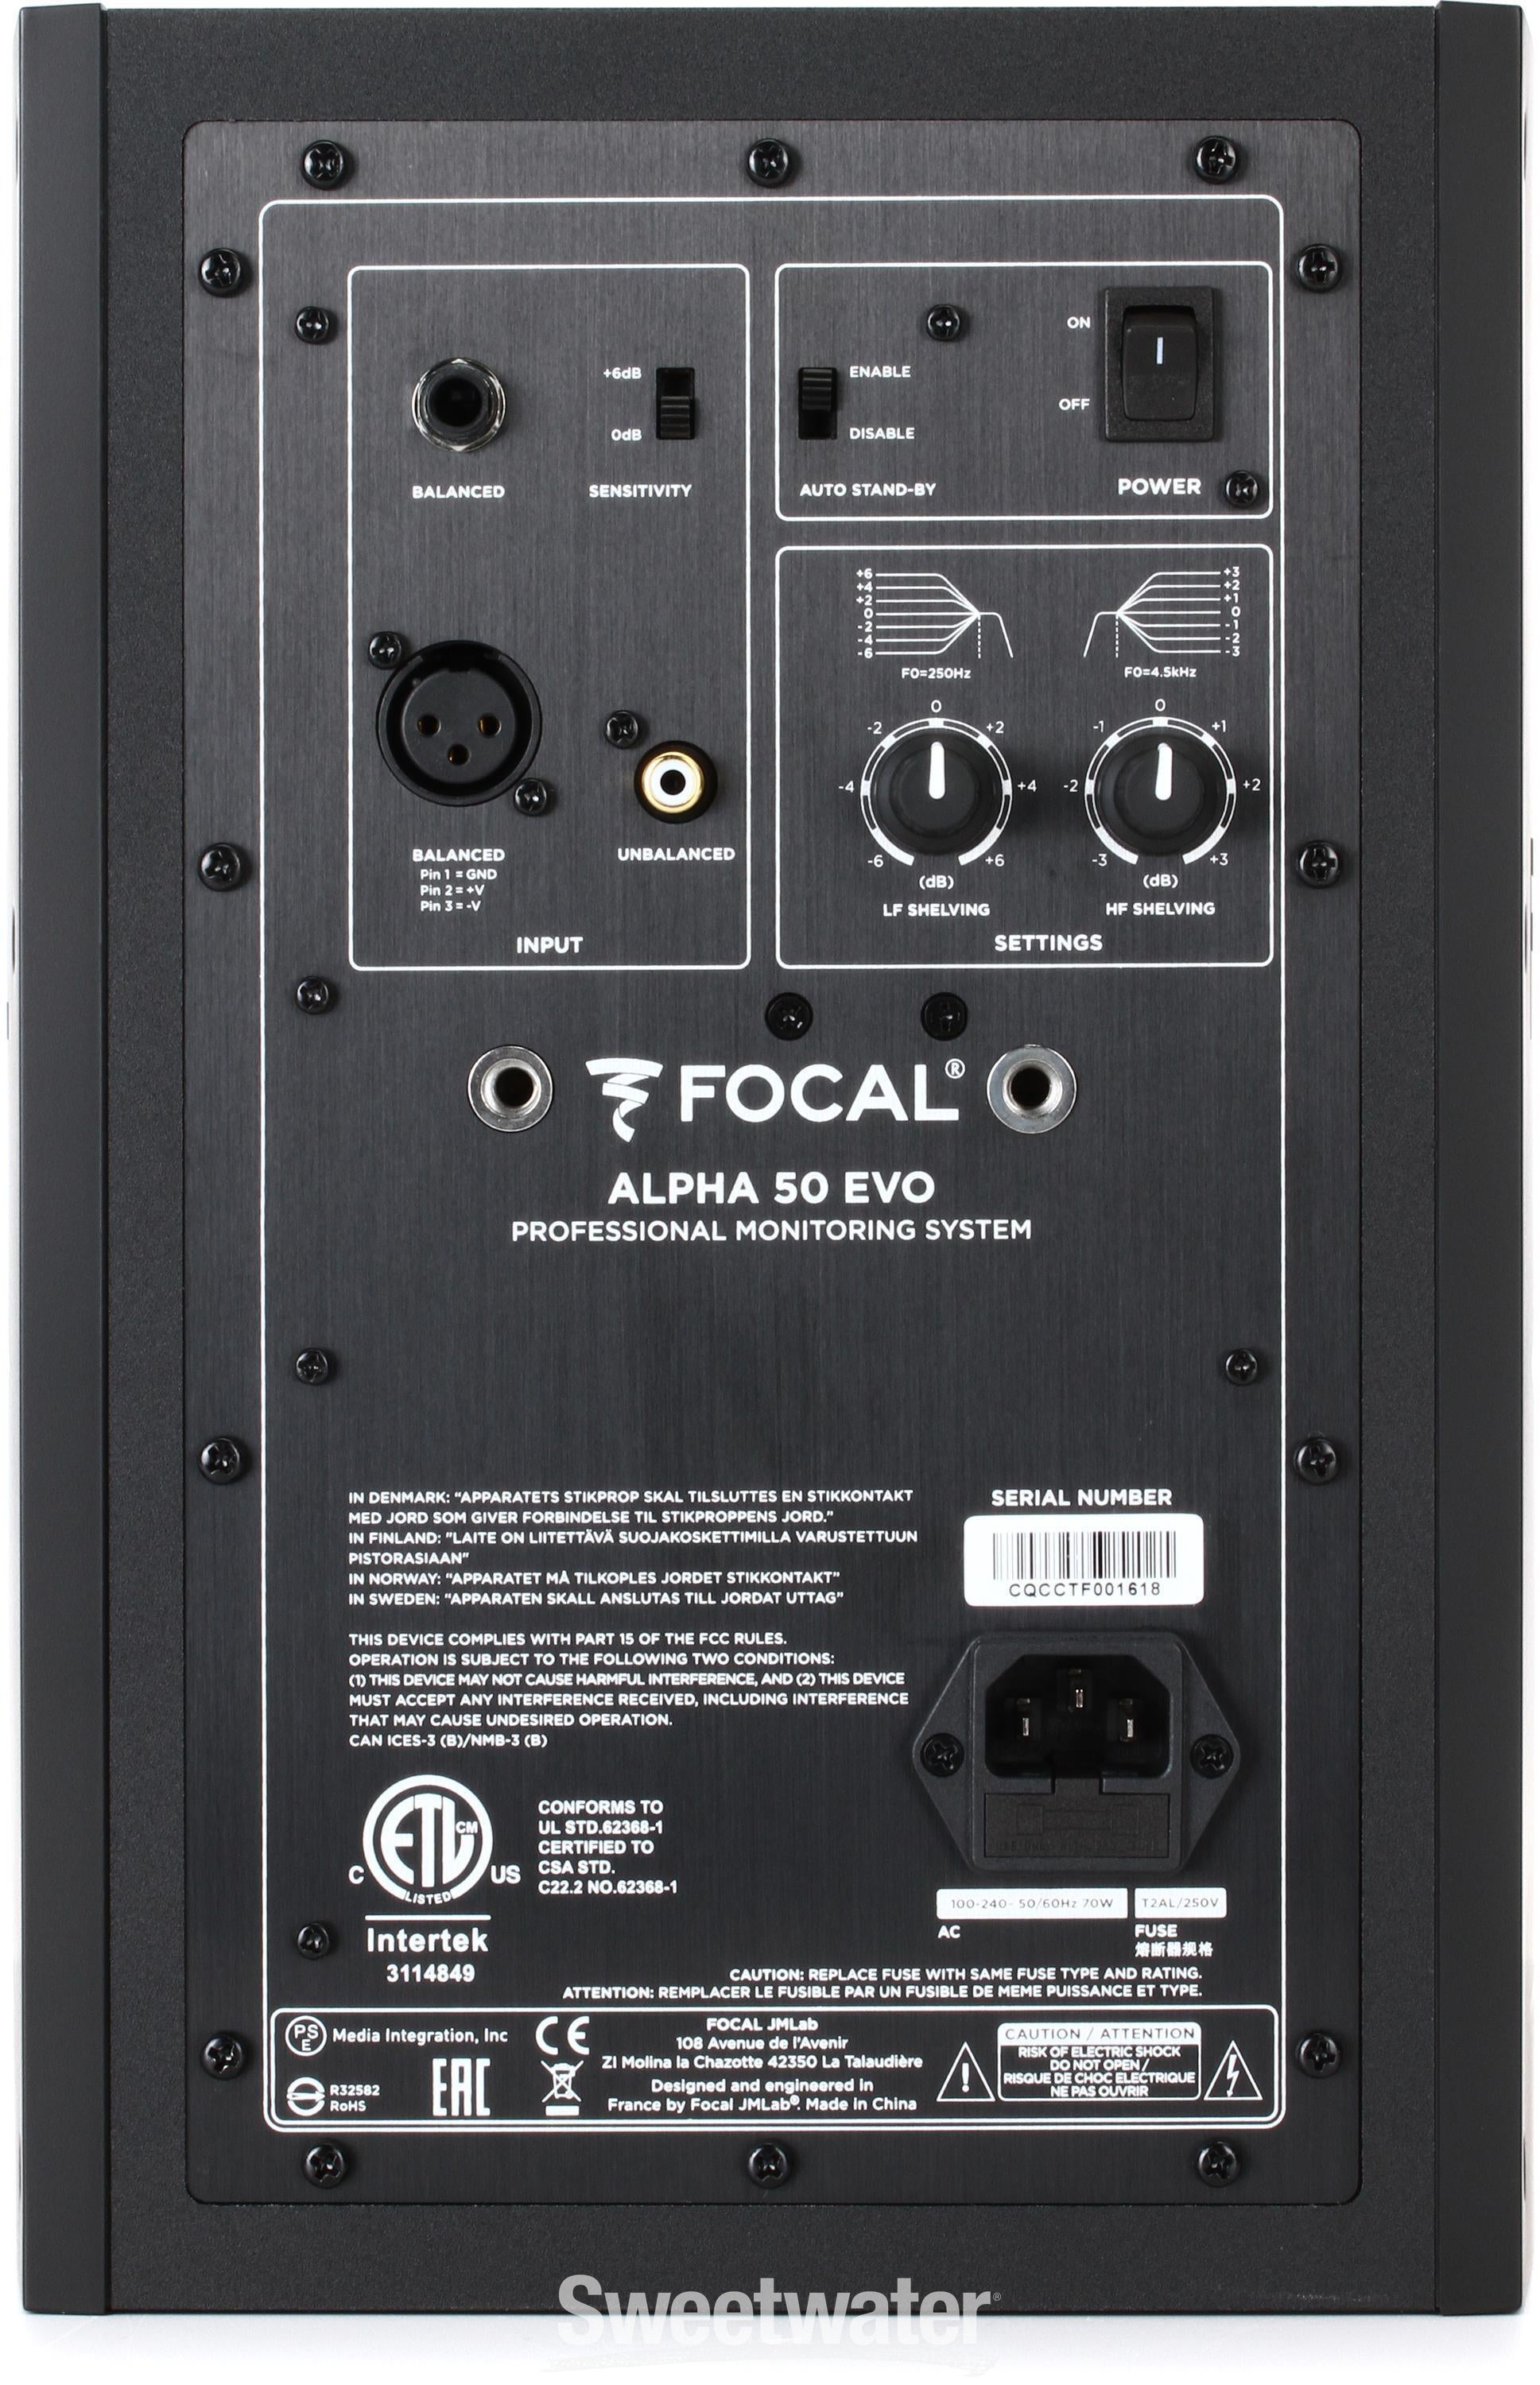 Focal Alpha 50 Evo 5 inch Powered Studio Monitor | Sweetwater